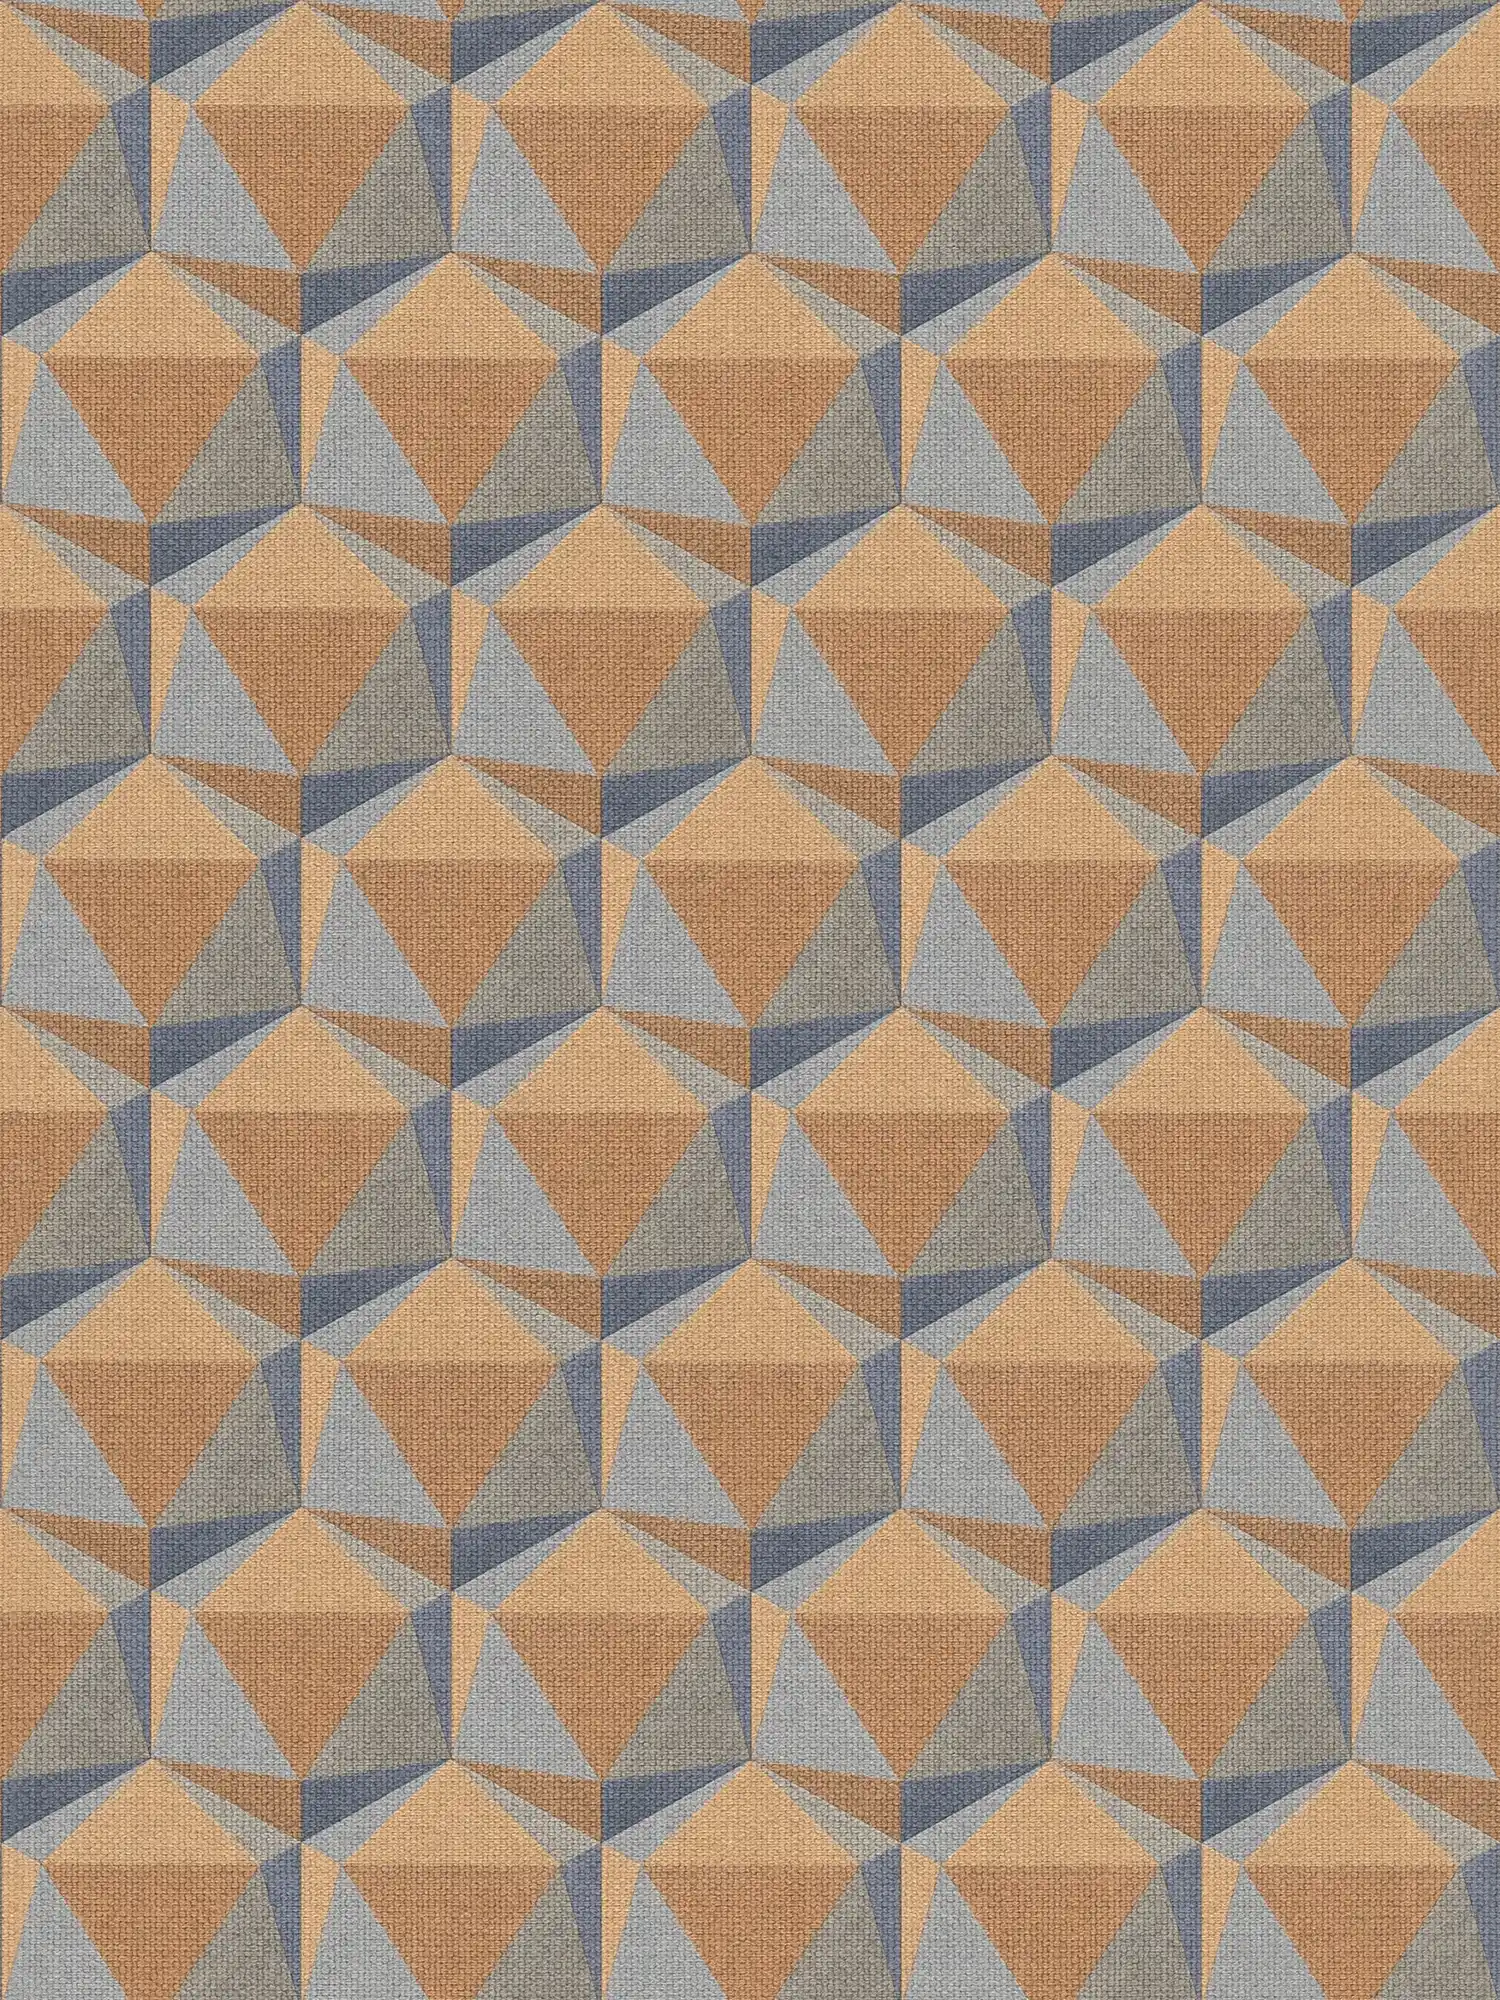         Graphic wallpaper retro pattern with 3D design - orange, blue
    